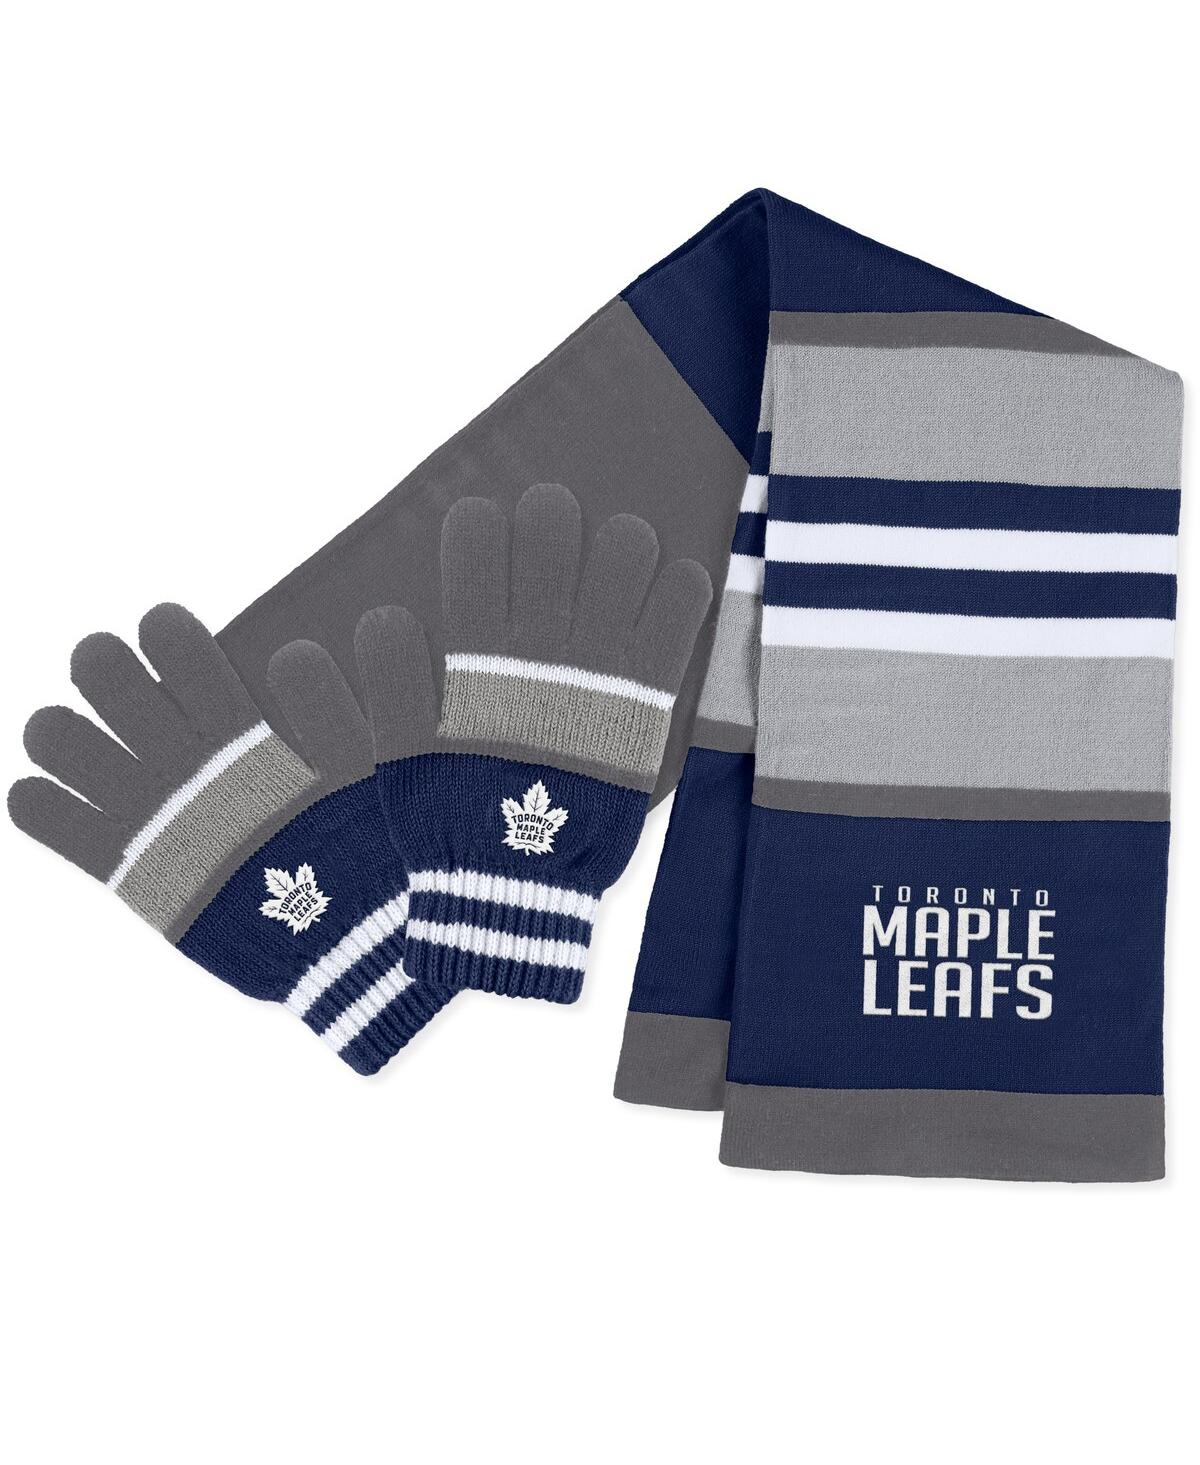 Women's Wear by Erin Andrews Toronto Maple Leafs Stripe Glove and Scarf Set - Gray, Navy